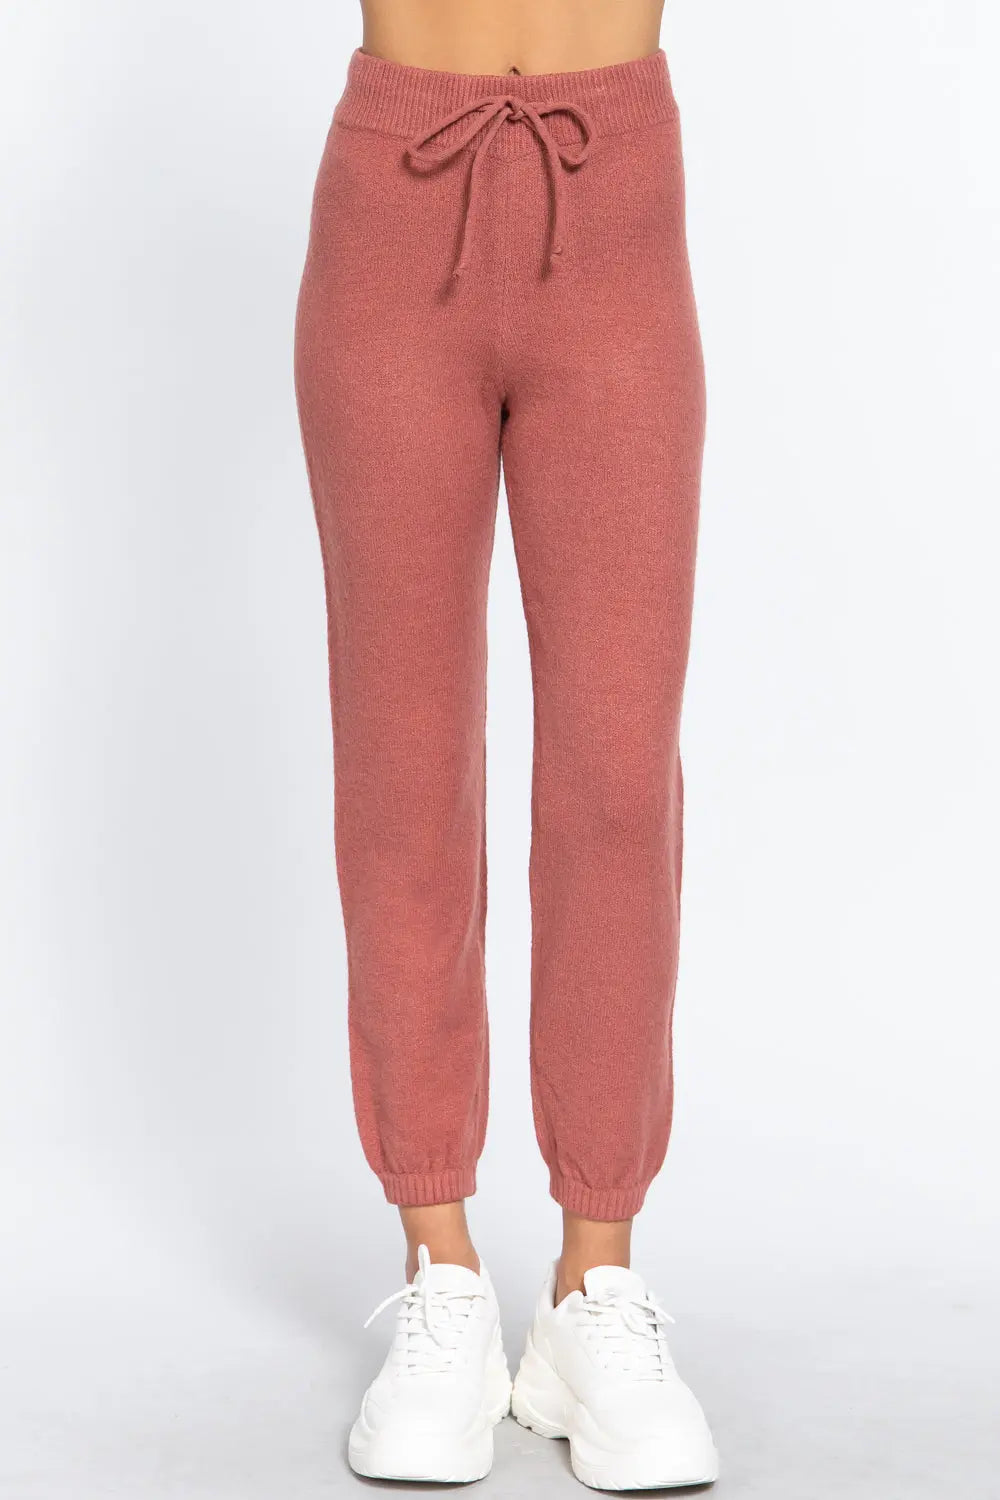 Drawstring Sweater Long Pants Sunny EvE Fashion